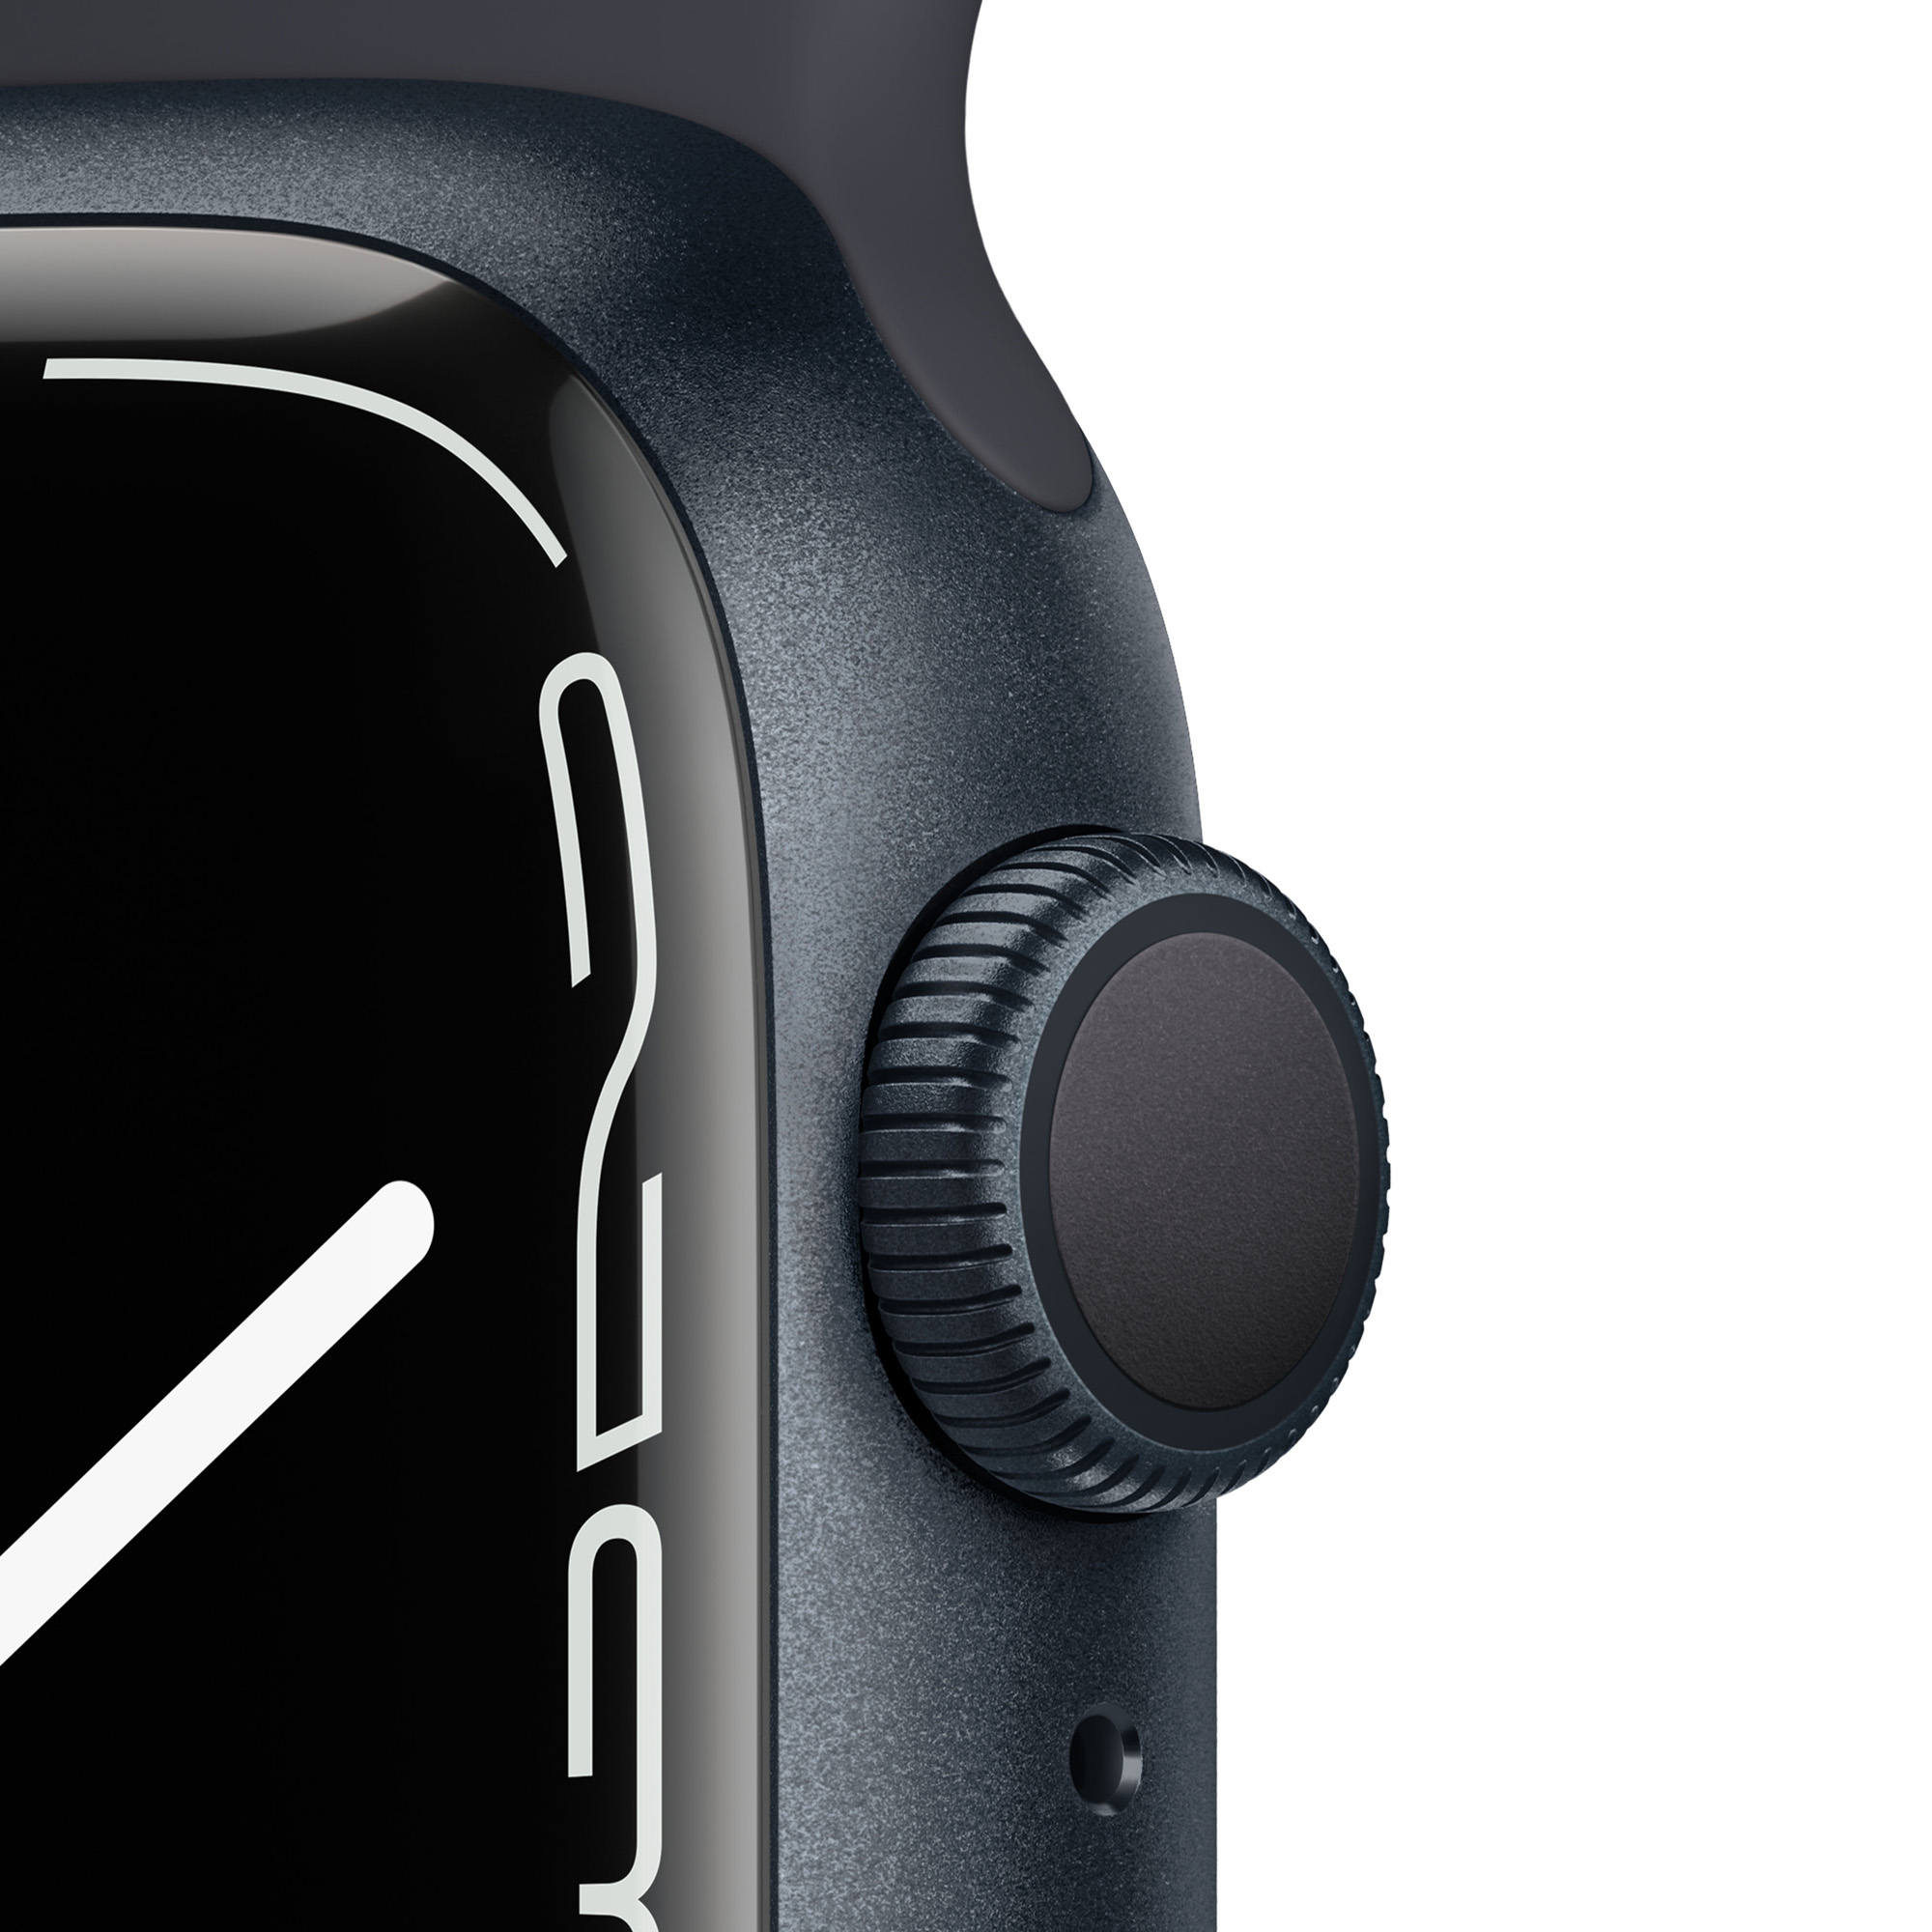 Apple Watch S7 GPS 41mm Midnight